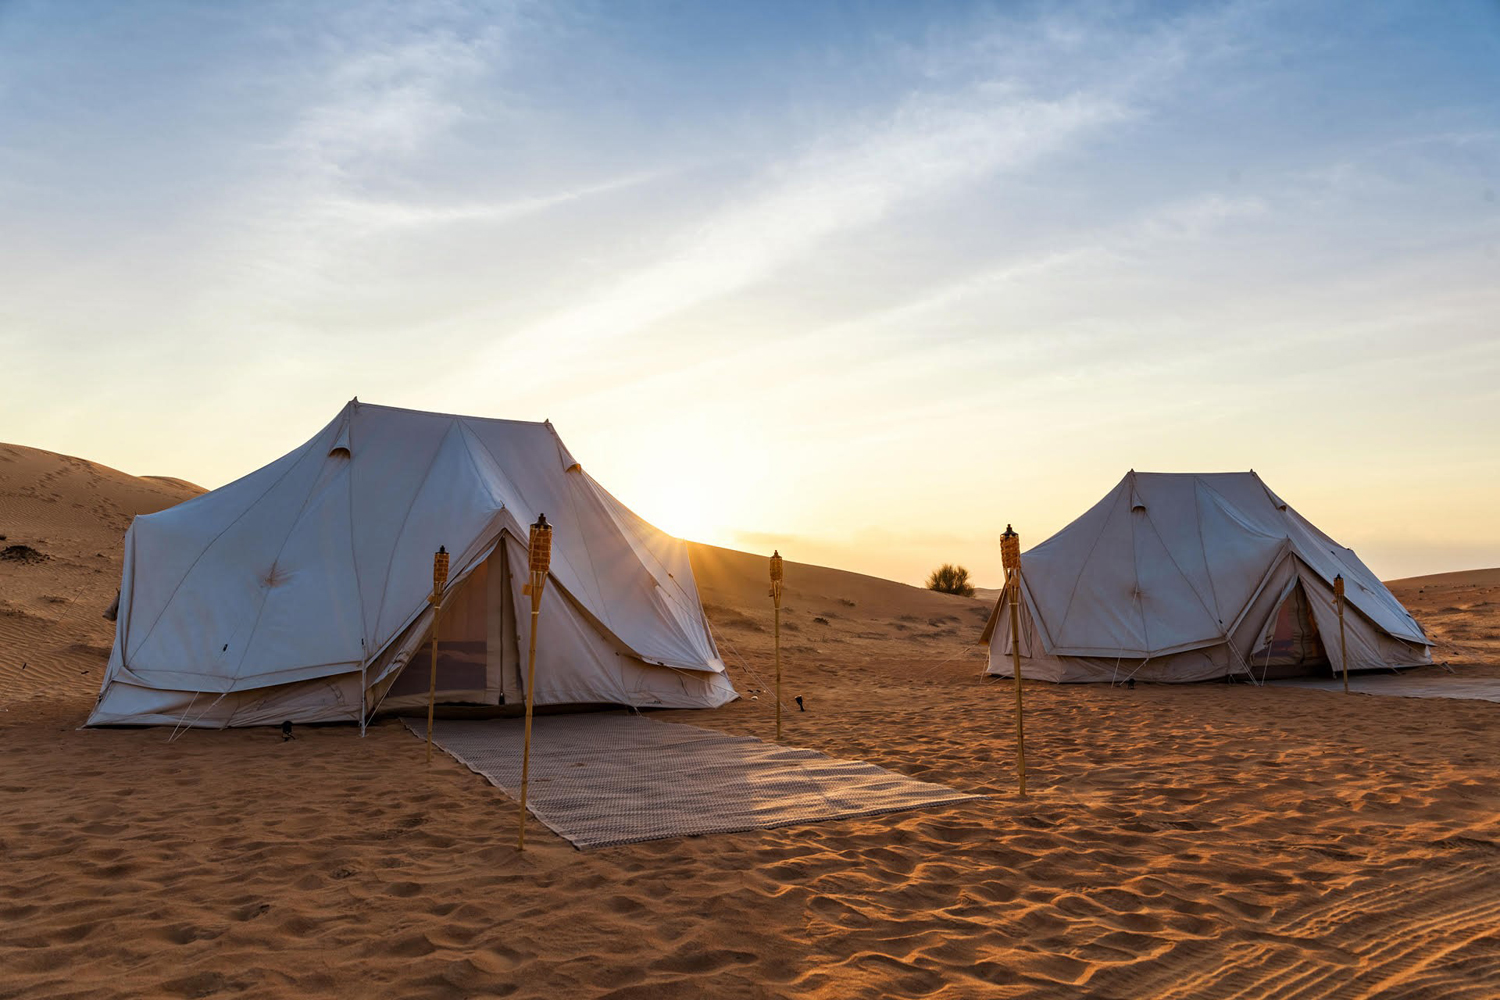 Dubai Desert Conservation Reserve Camping